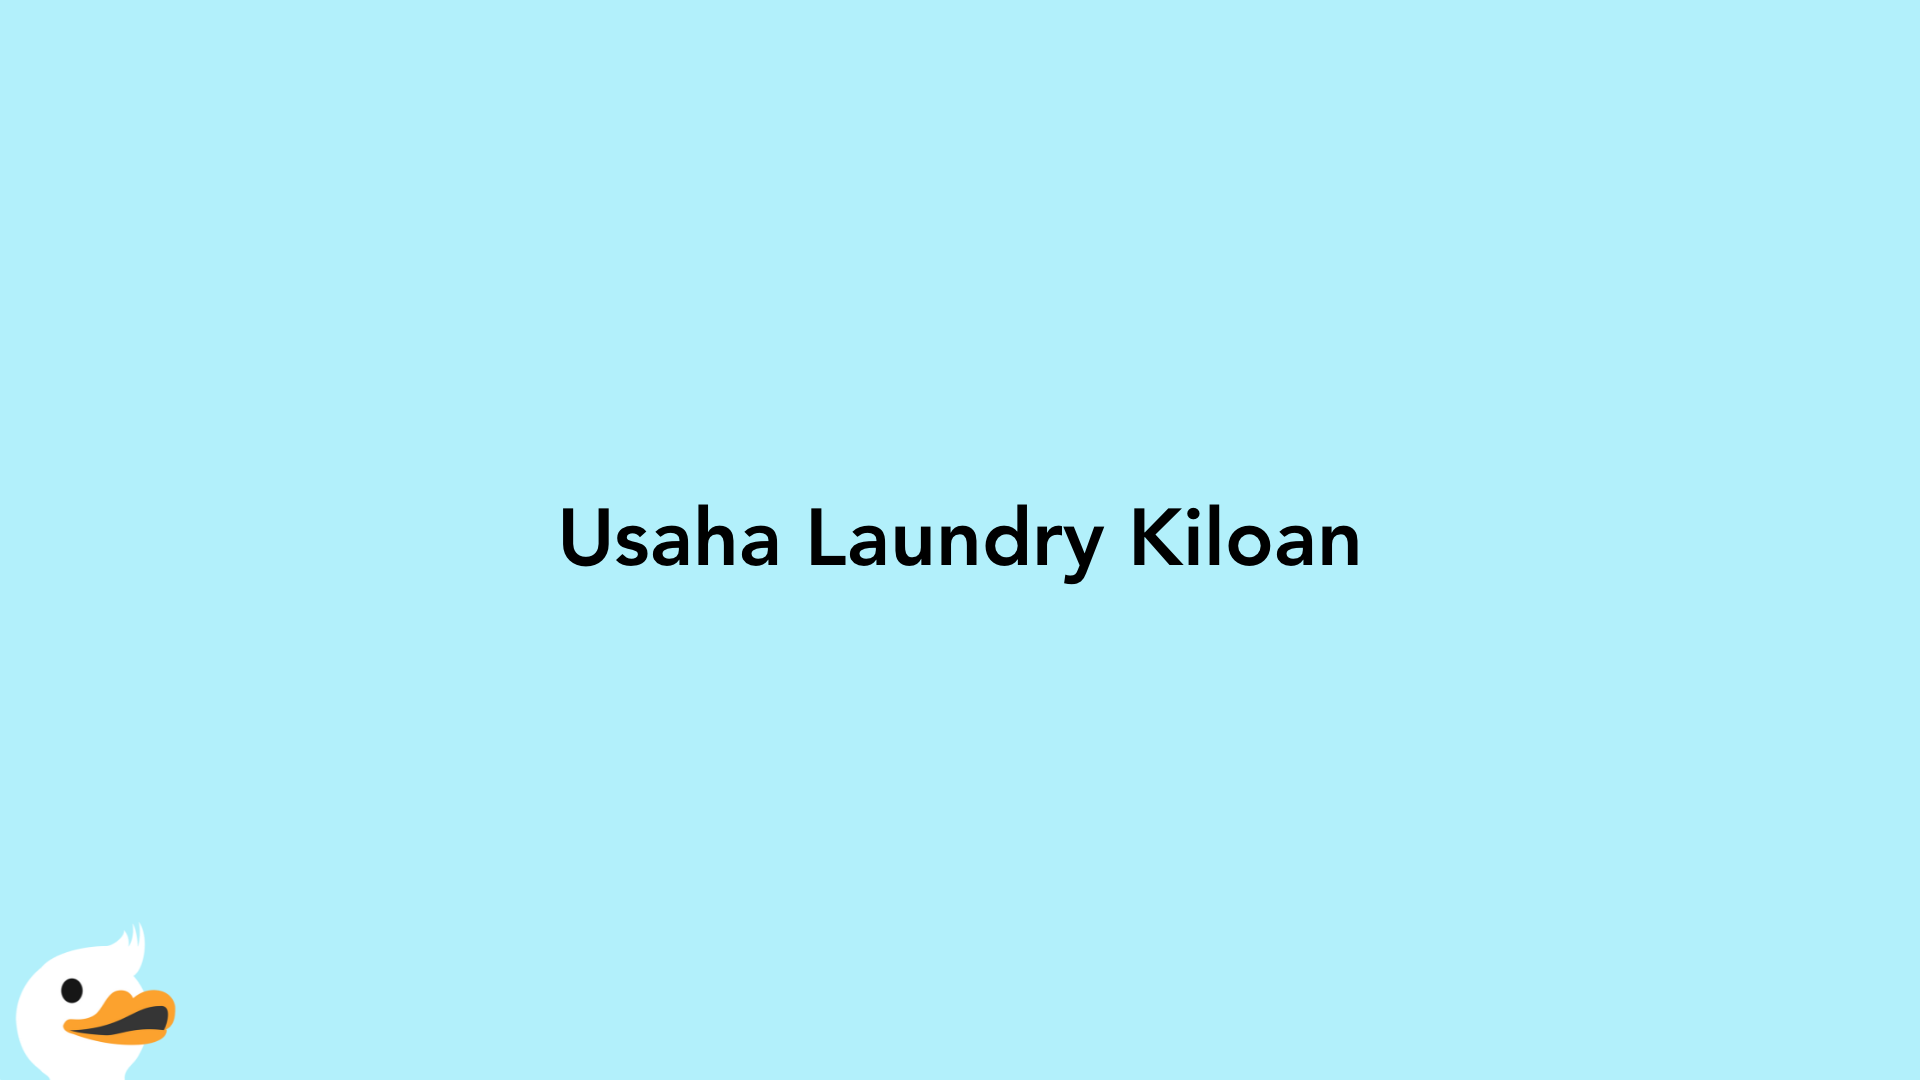 Usaha Laundry Kiloan